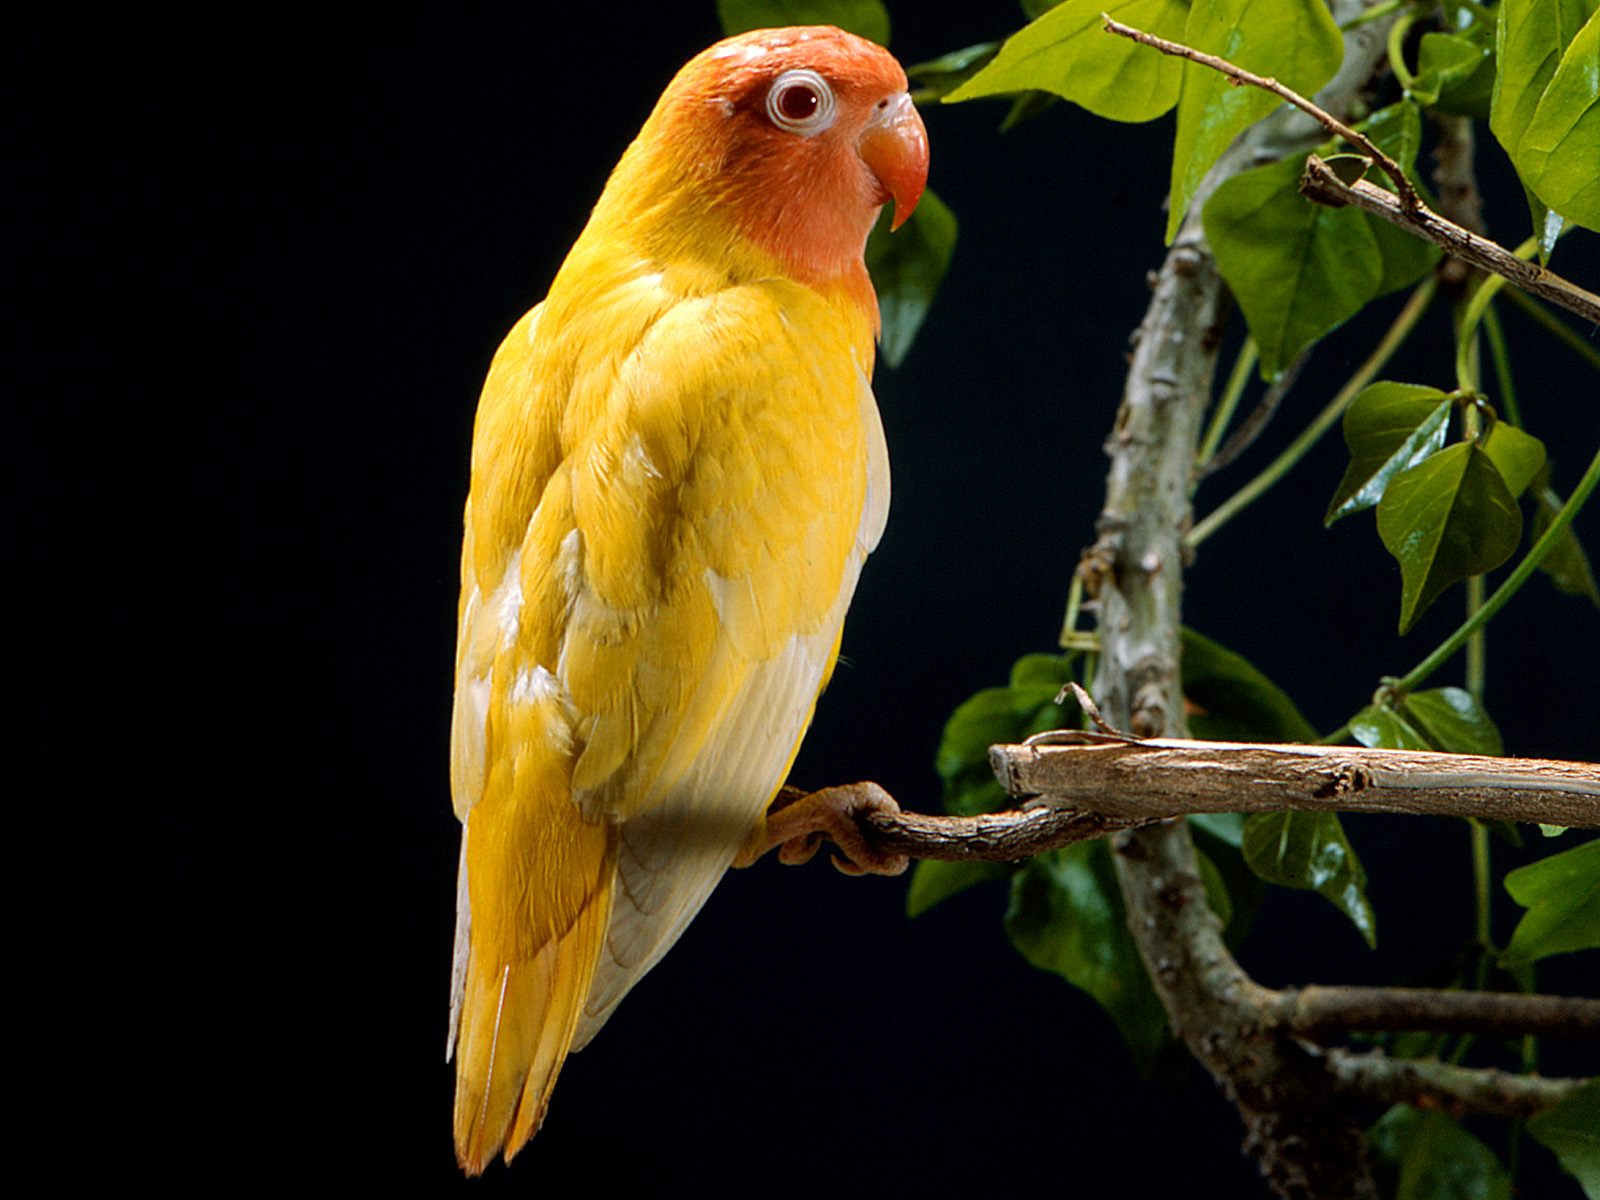 desktop images of parrots wallpaper